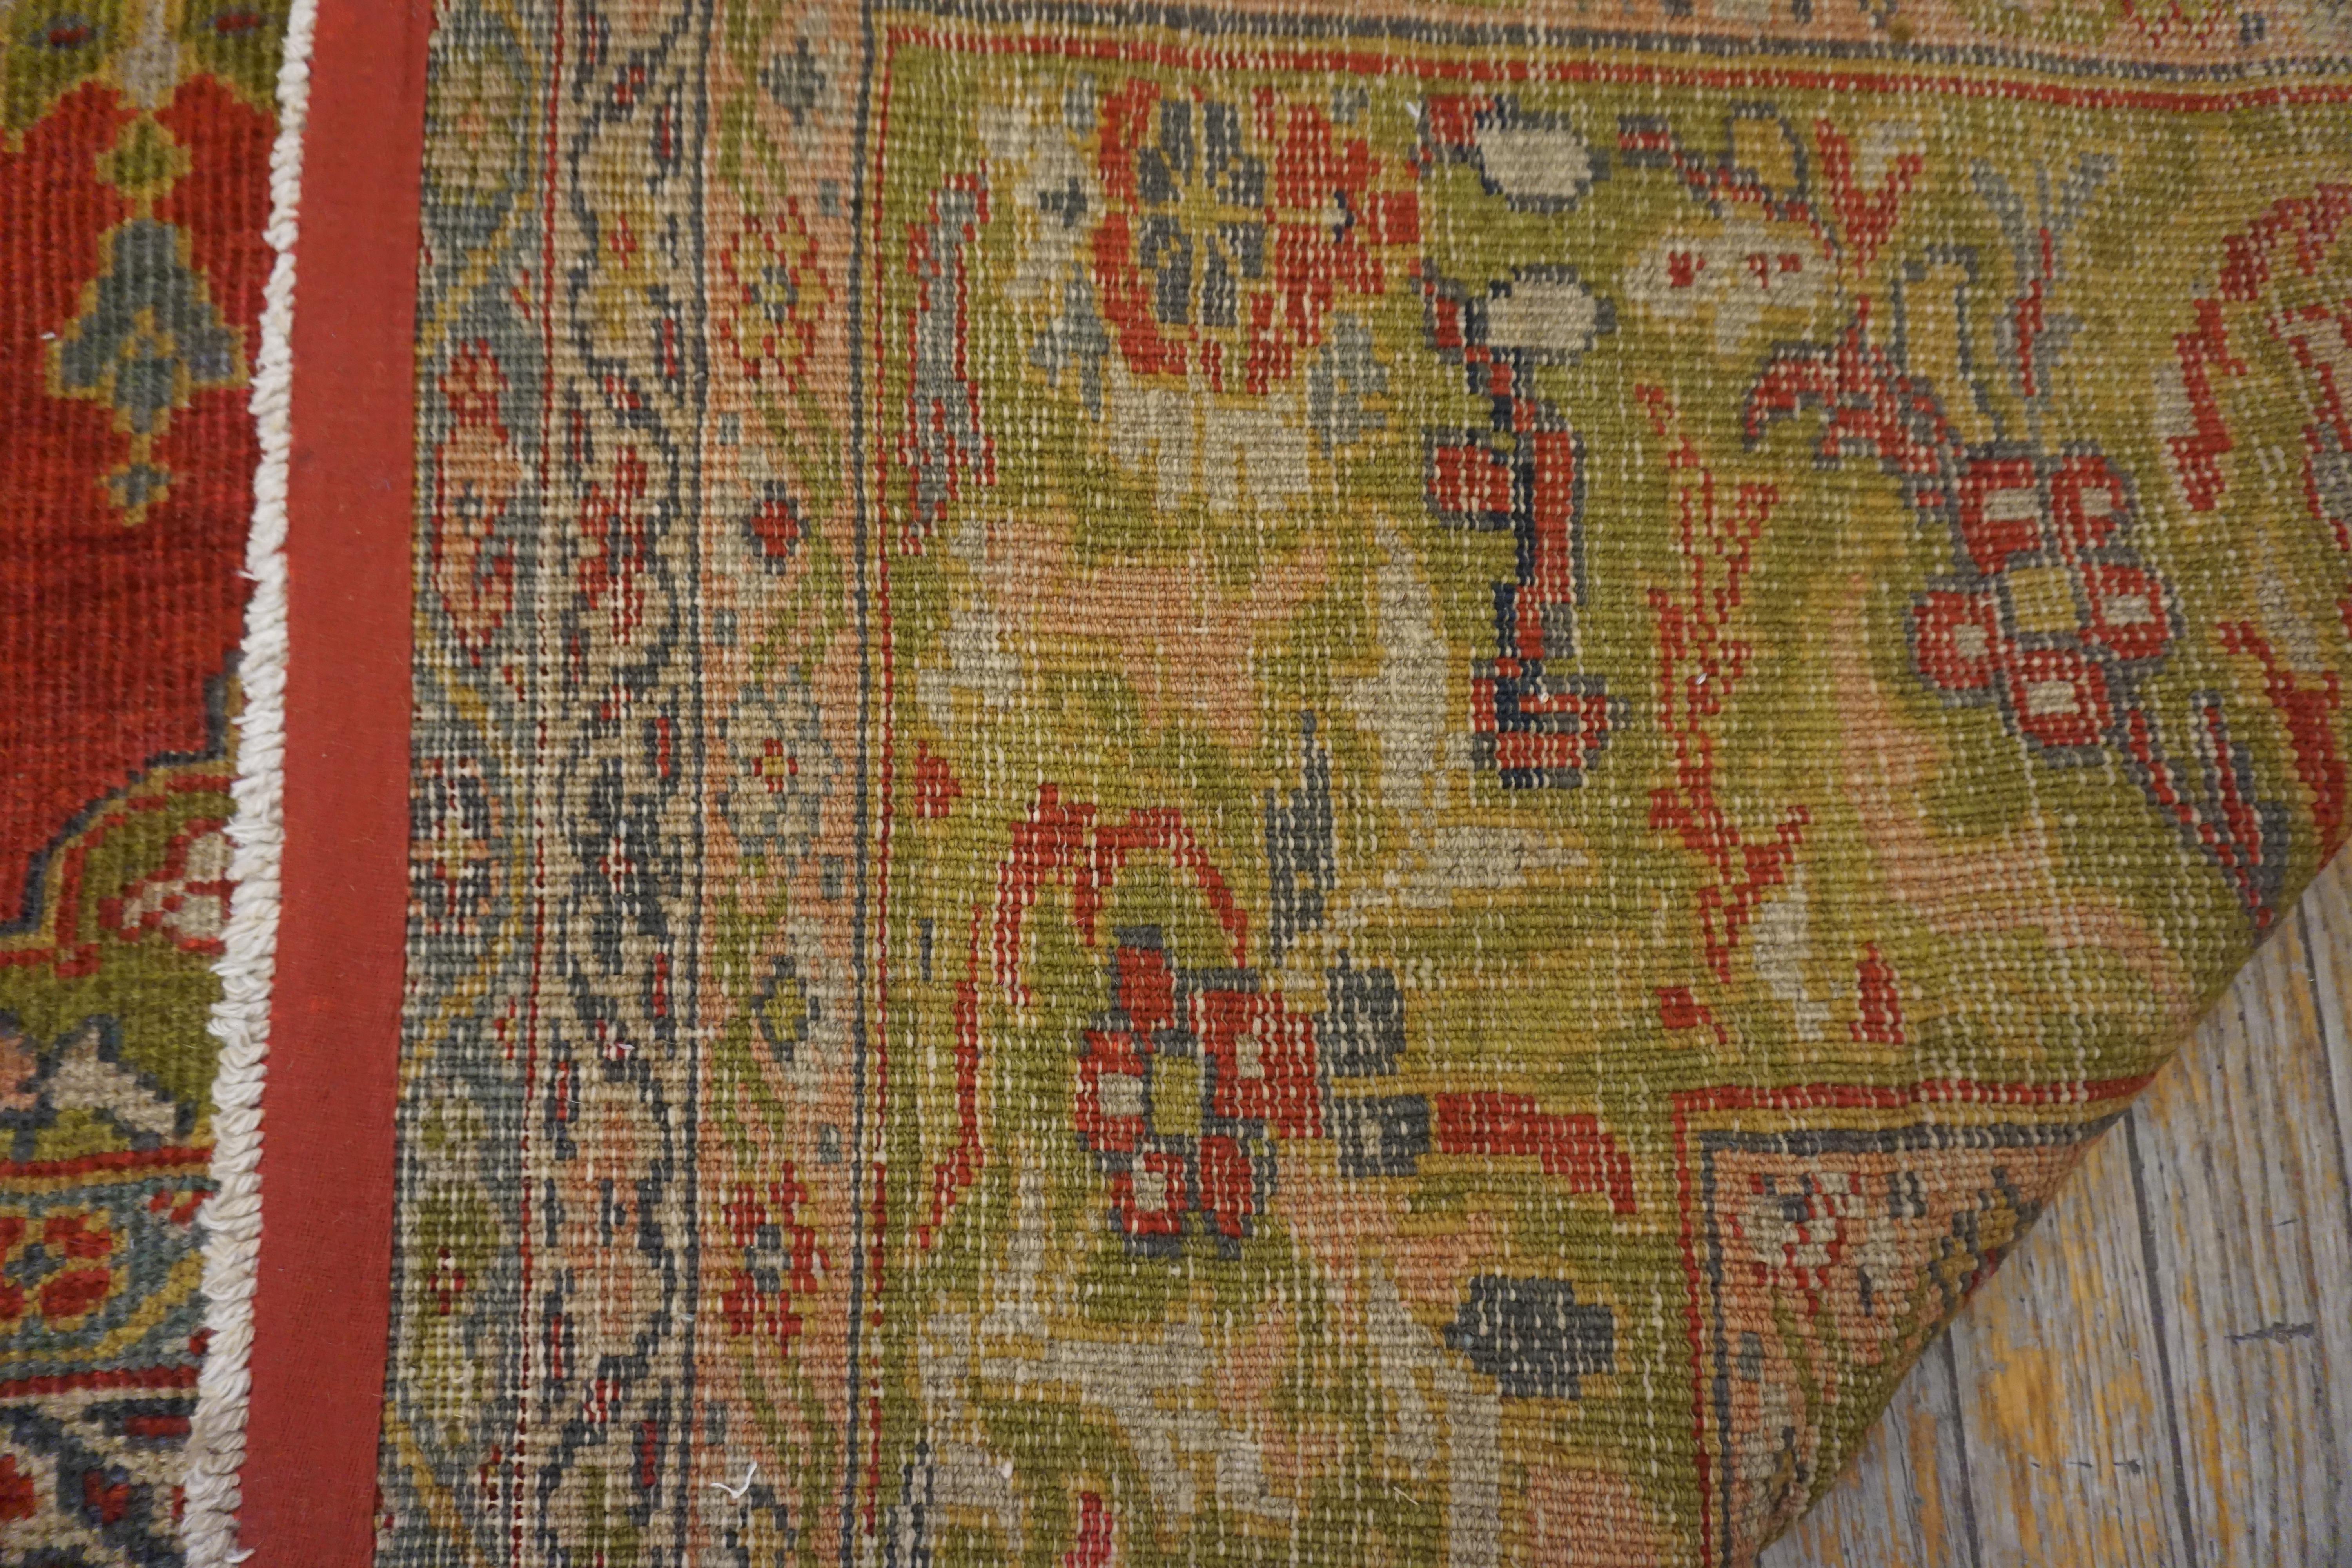 19th Century Persian Sultanabad Carpet ( 14'10